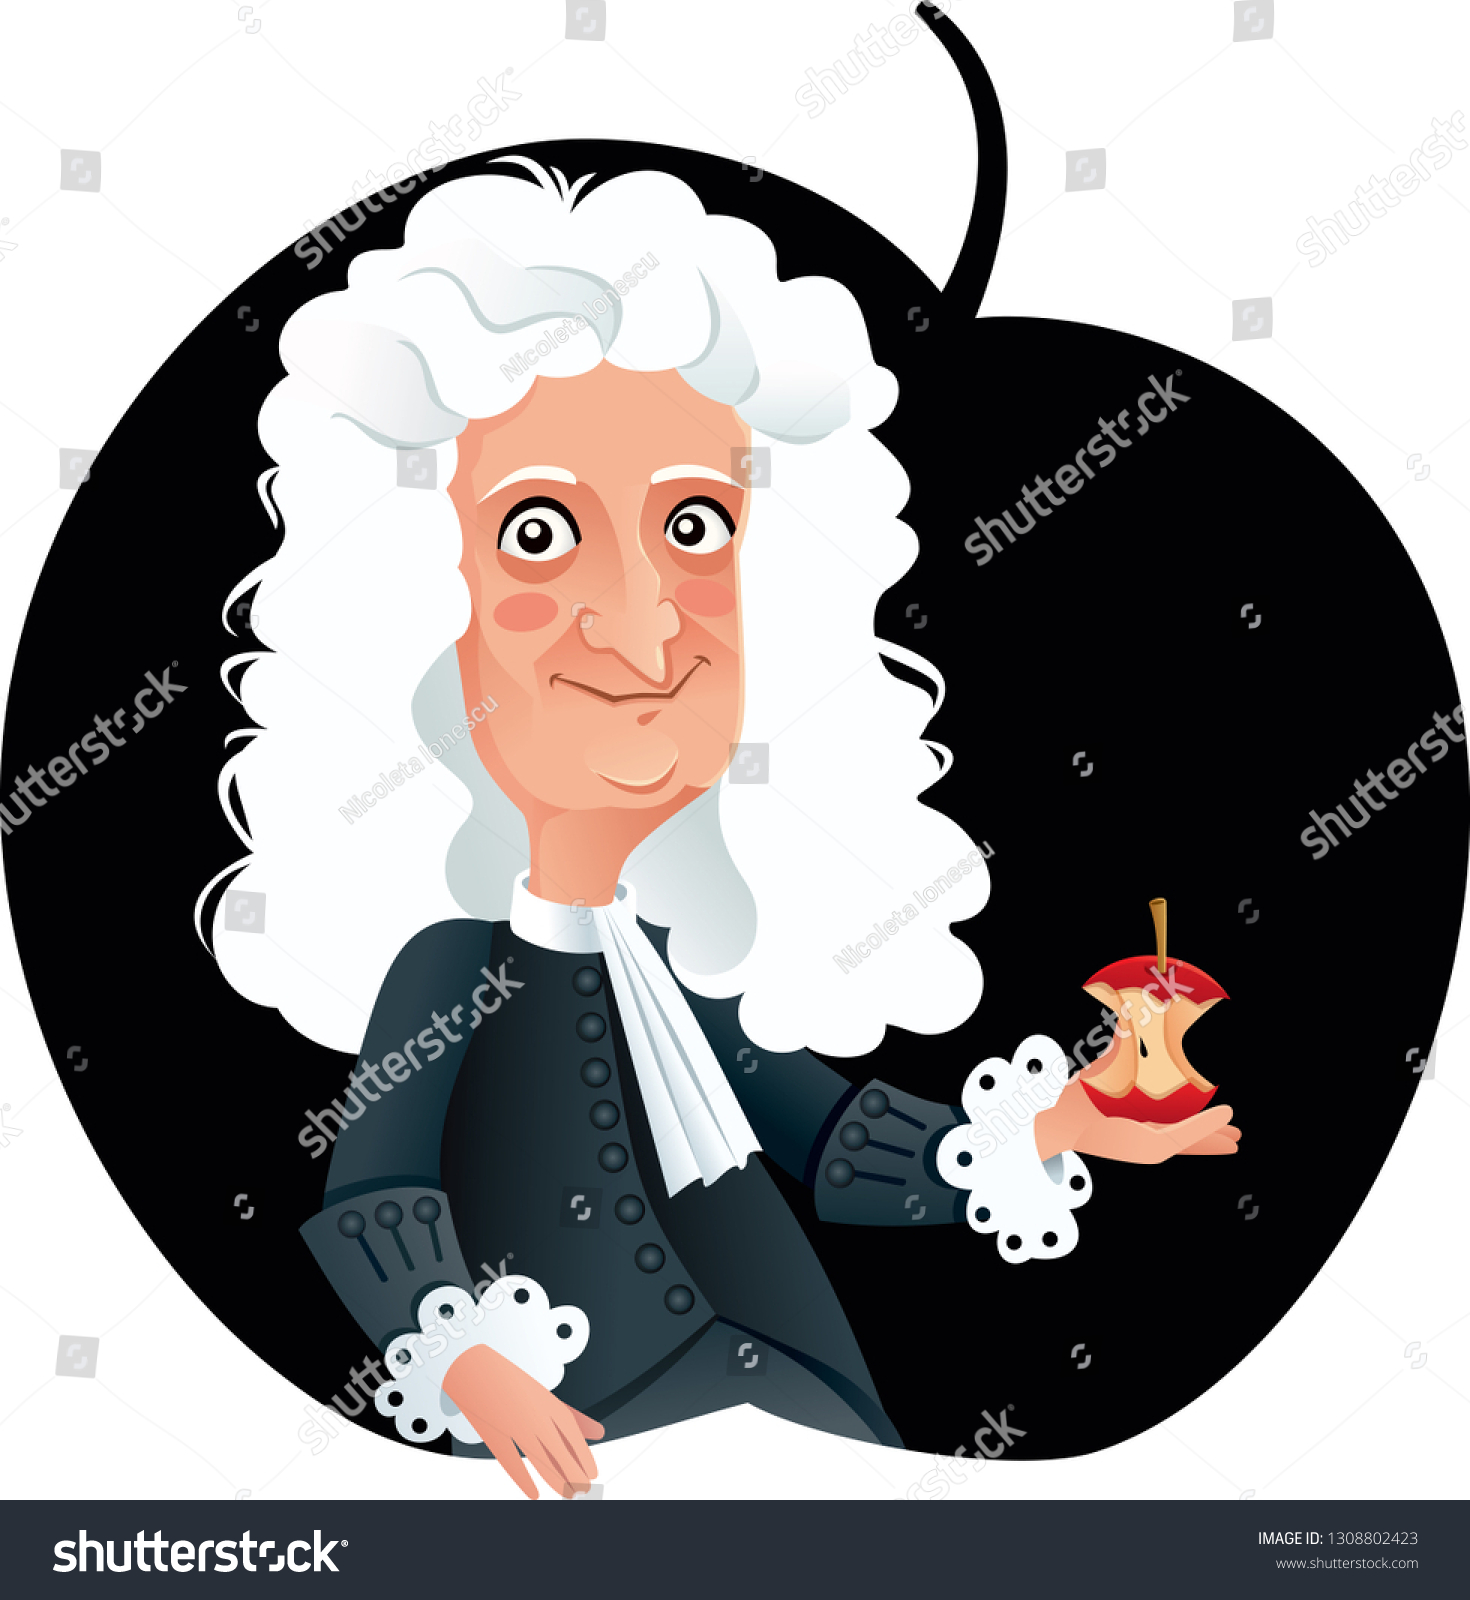 Isaac Newton Vector Caricature Funny Cartoon Stock Vector Royalty Free 1308802423 Shutterstock 3980